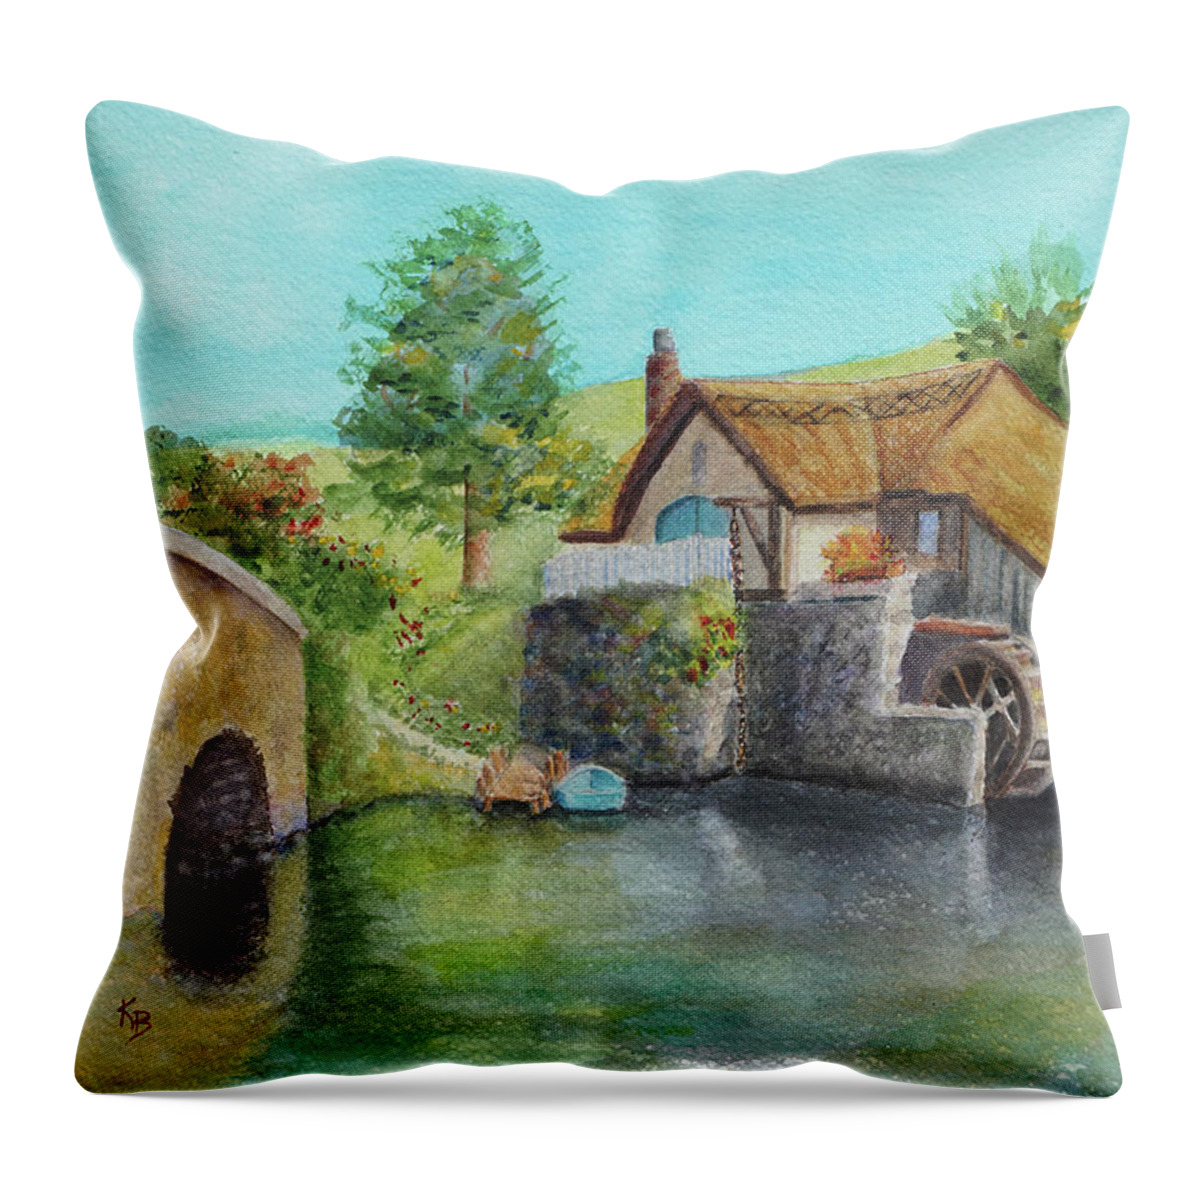 New Zealand Throw Pillow featuring the painting The Shire by Karen Fleschler